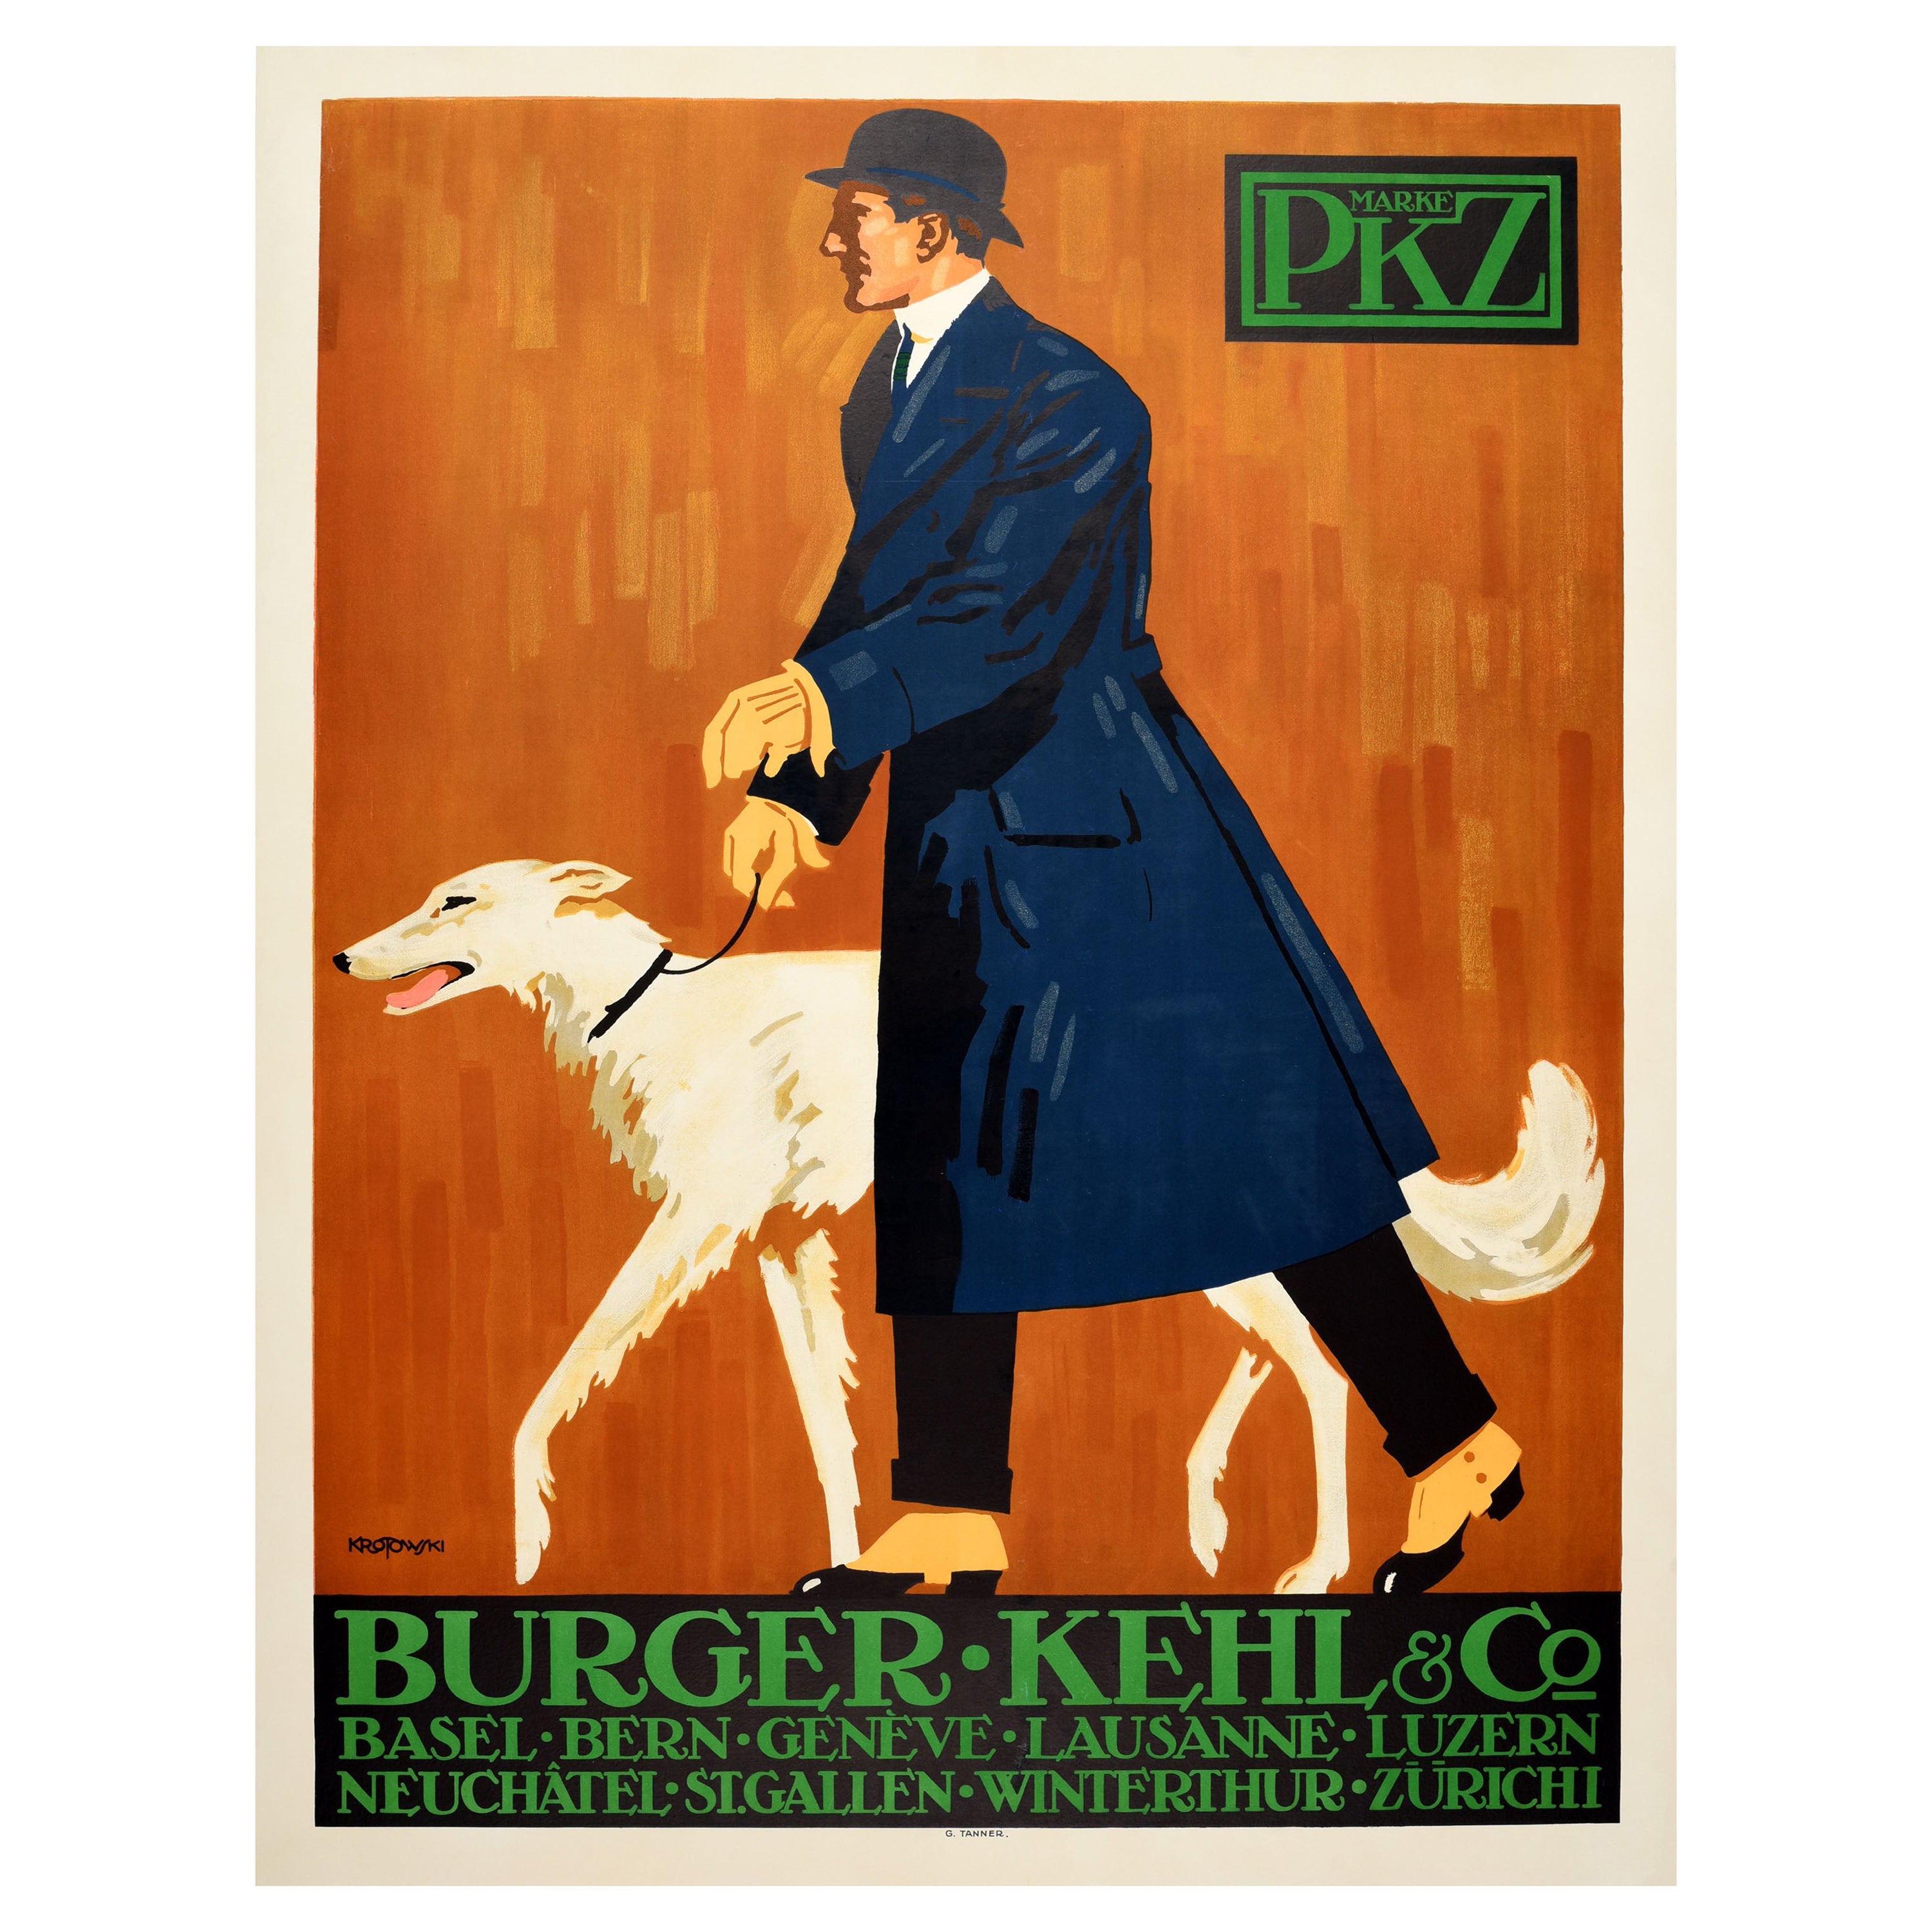 Original Antikes Werbeplakat PKZ Burger Kehl & Co Herrenmode-Design, Original